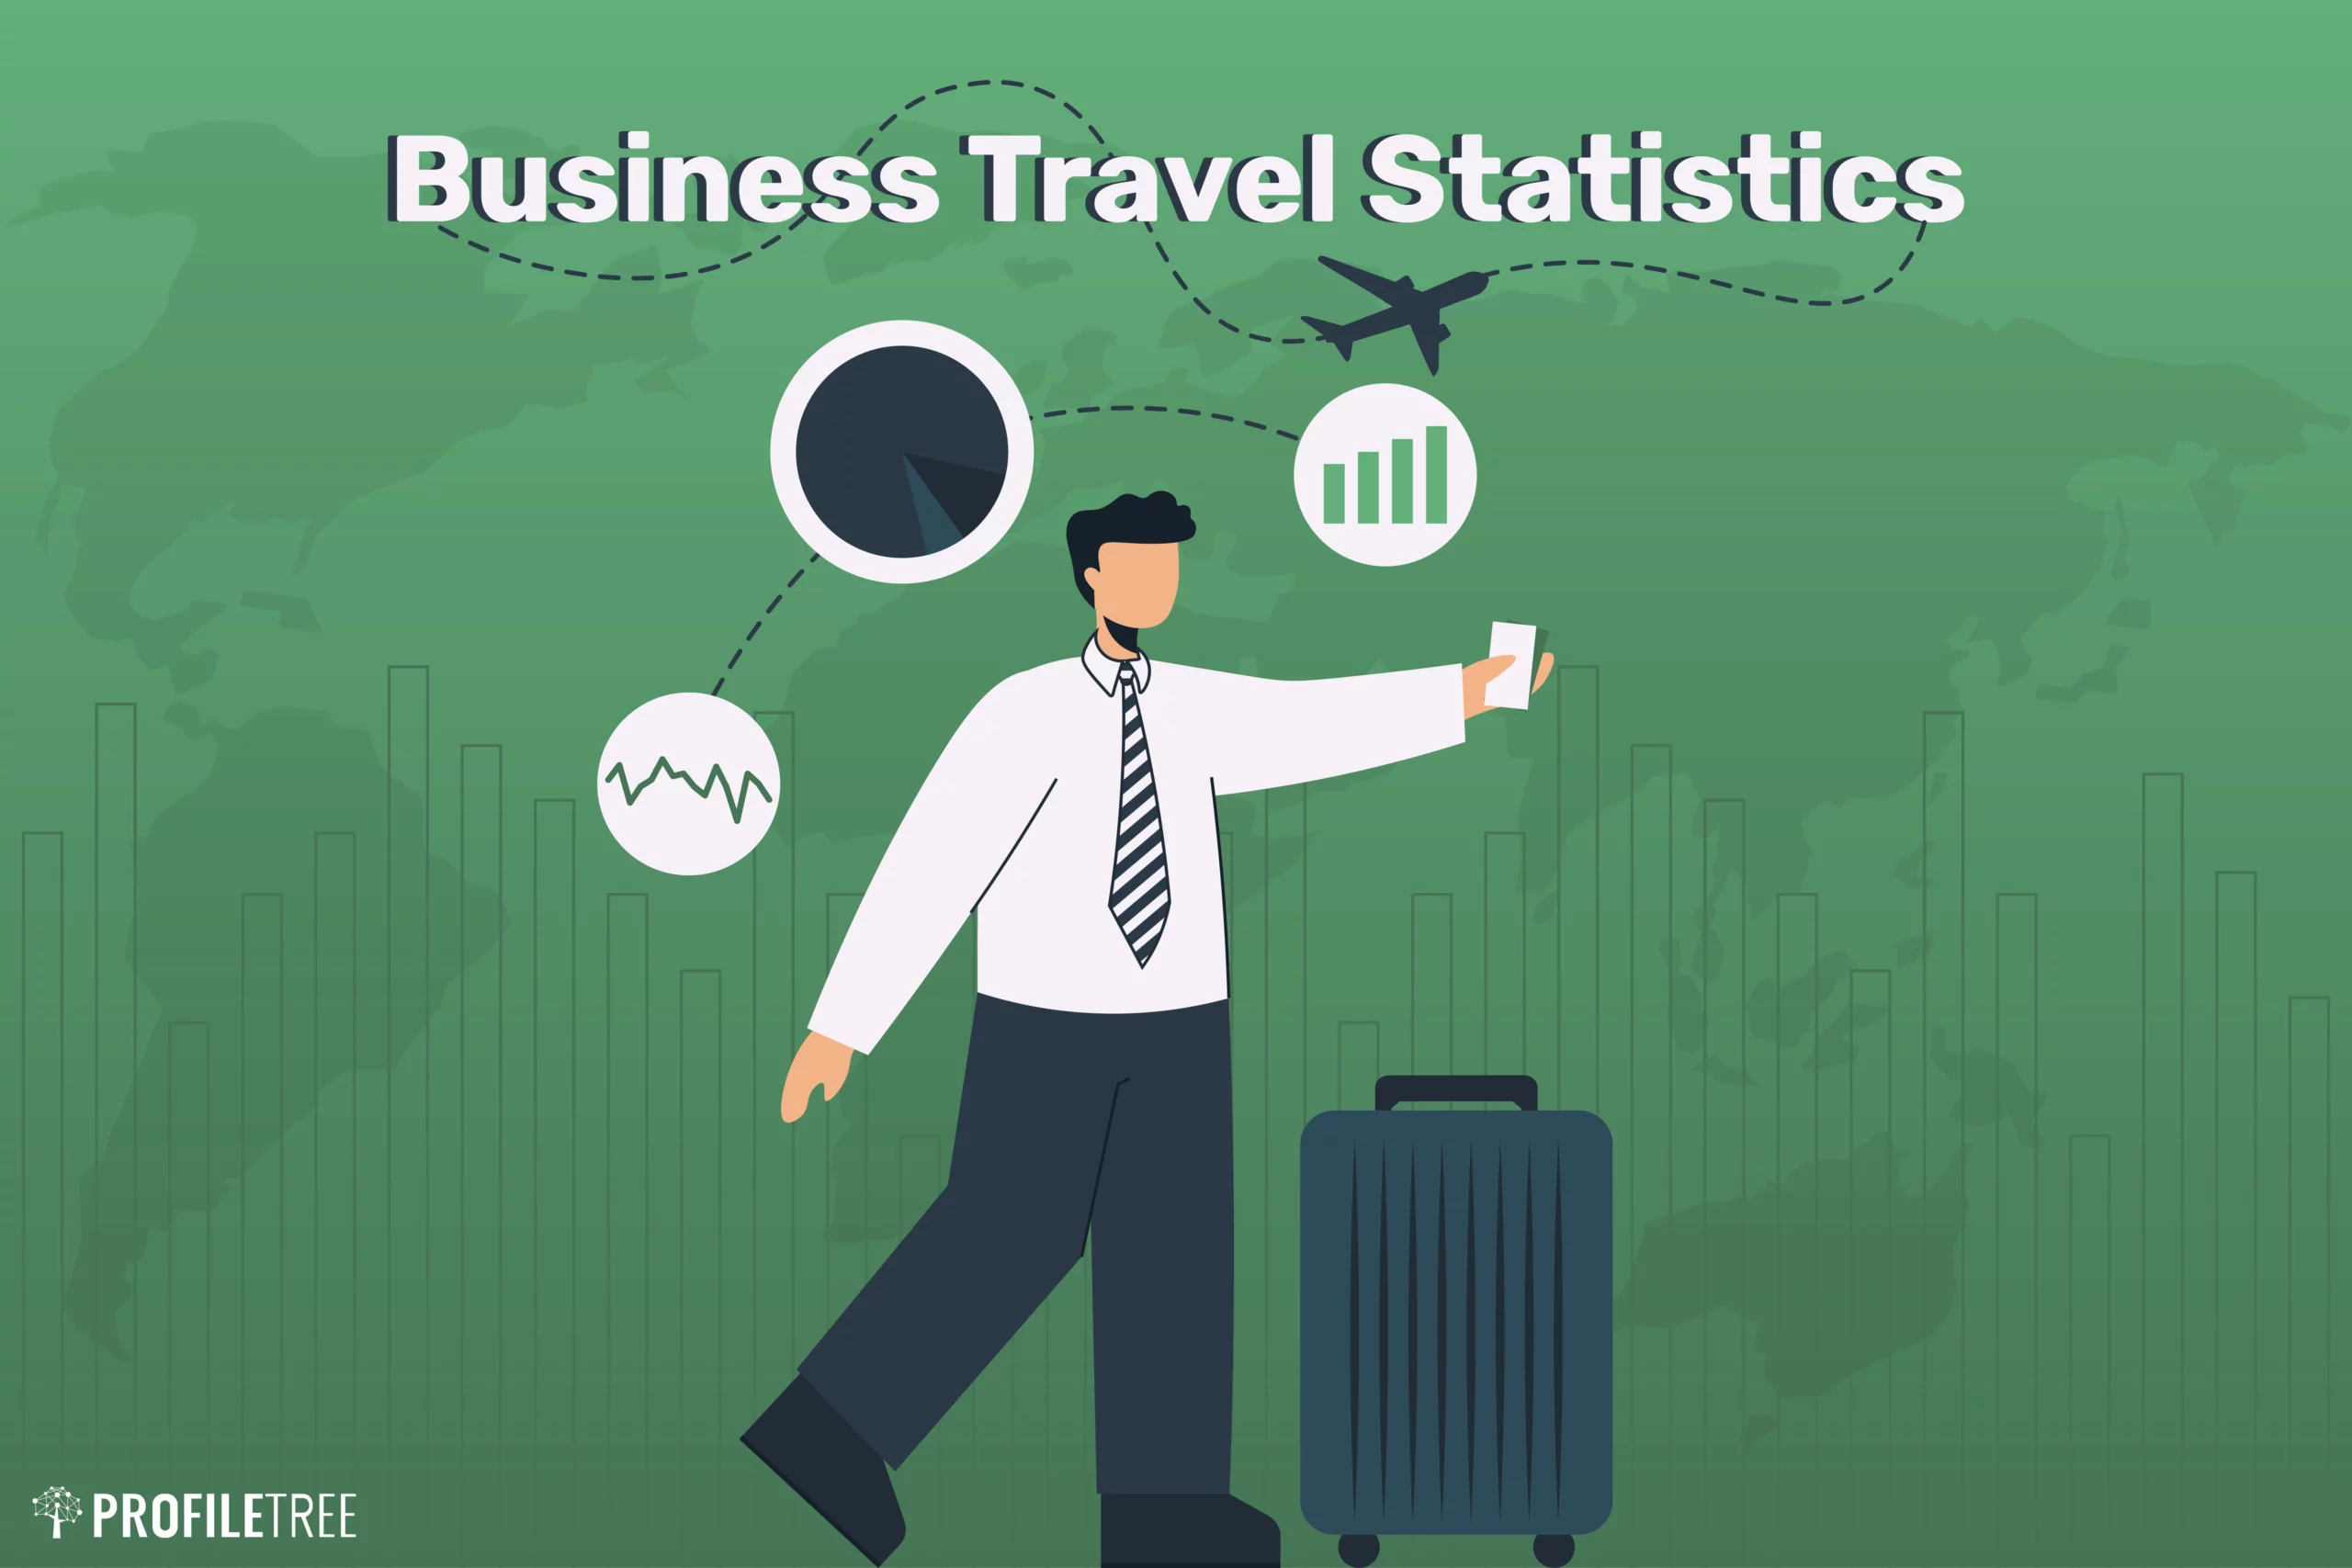 Business Travel Statistics